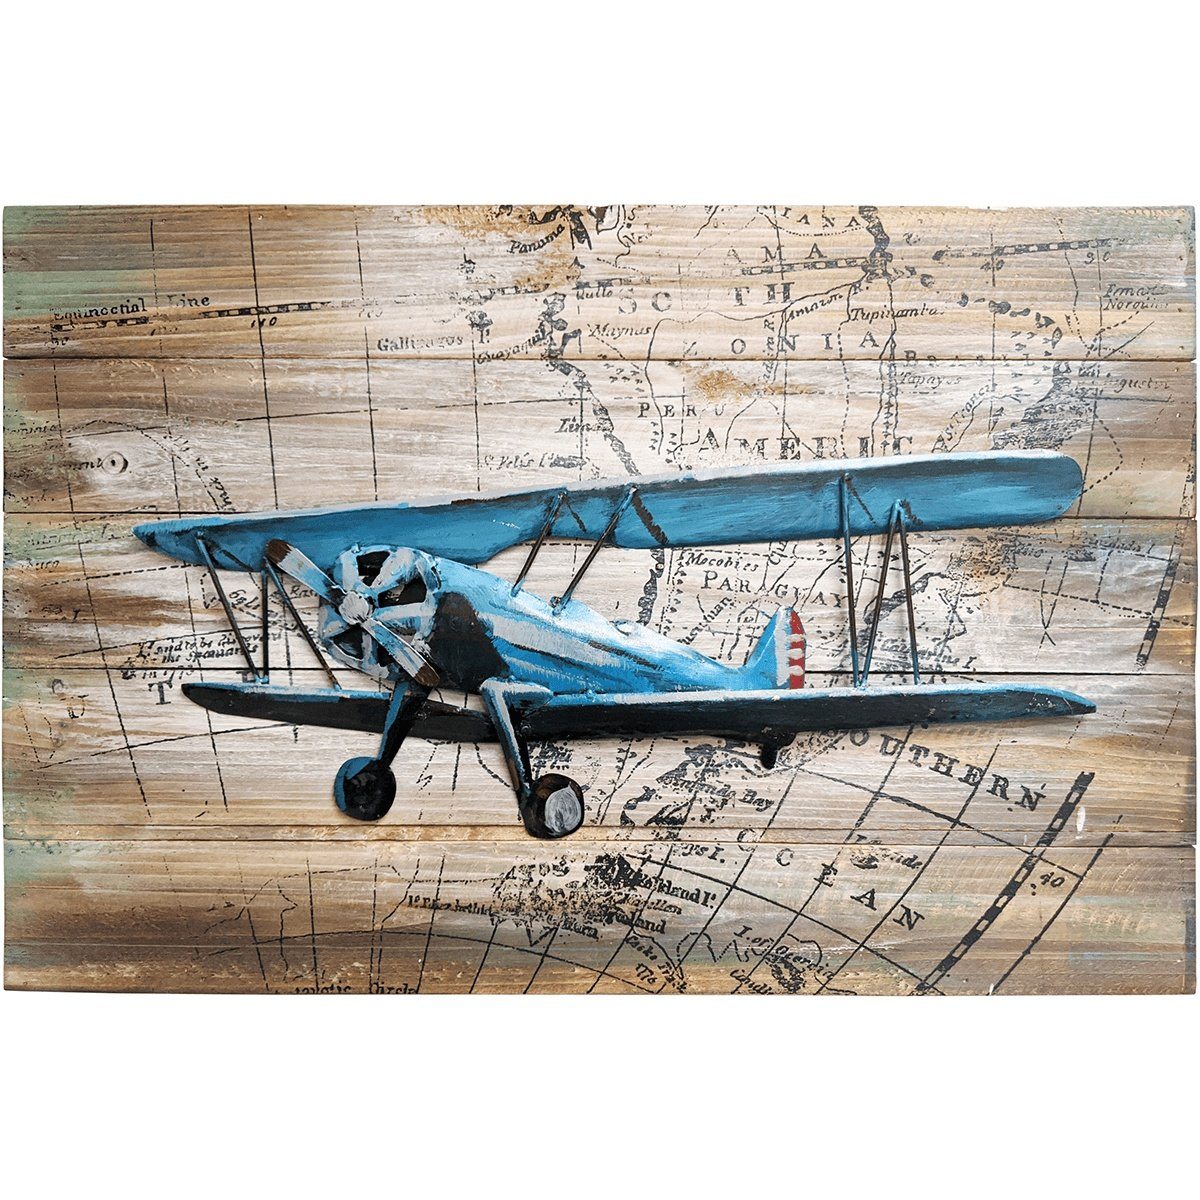 Pilot Toys Bygone Biplane Mixed Media Art - Blue - PilotMall.com